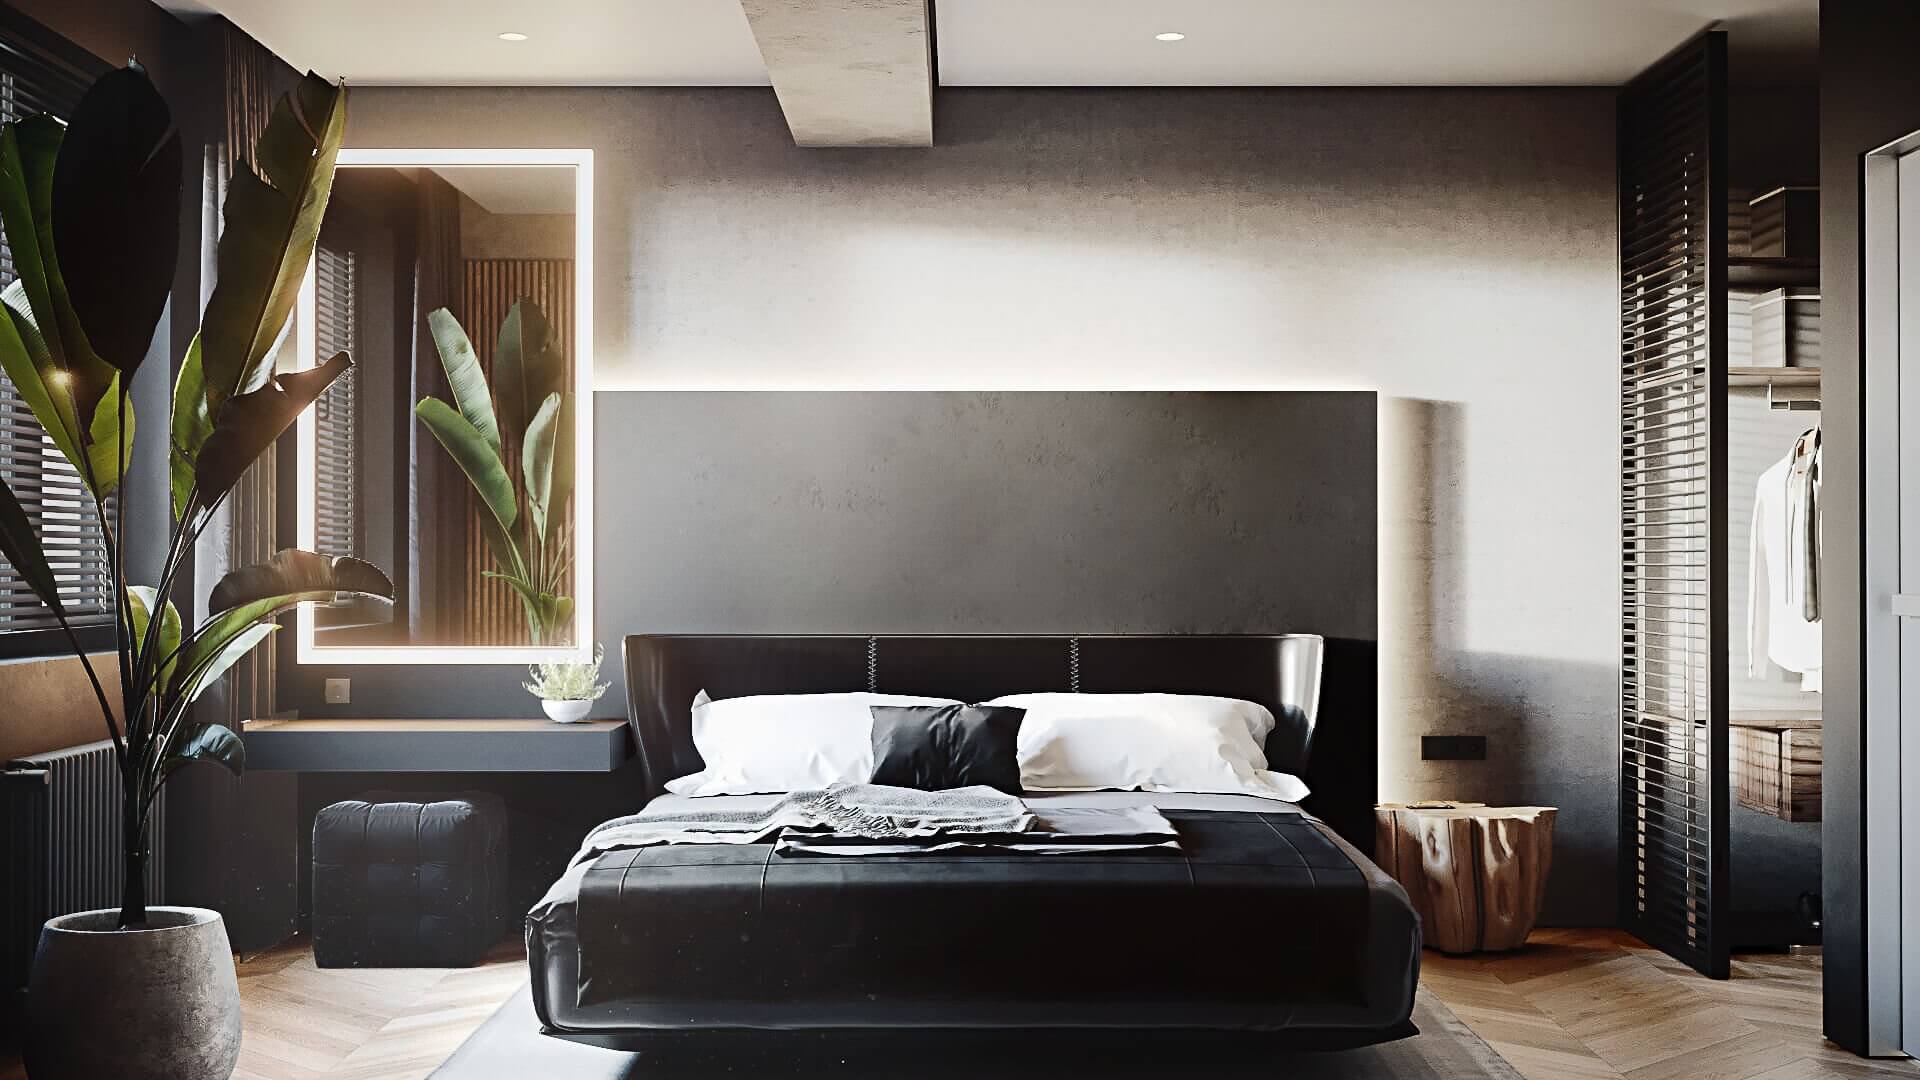 Nest Apartment bedroom design modern - cgi visualization